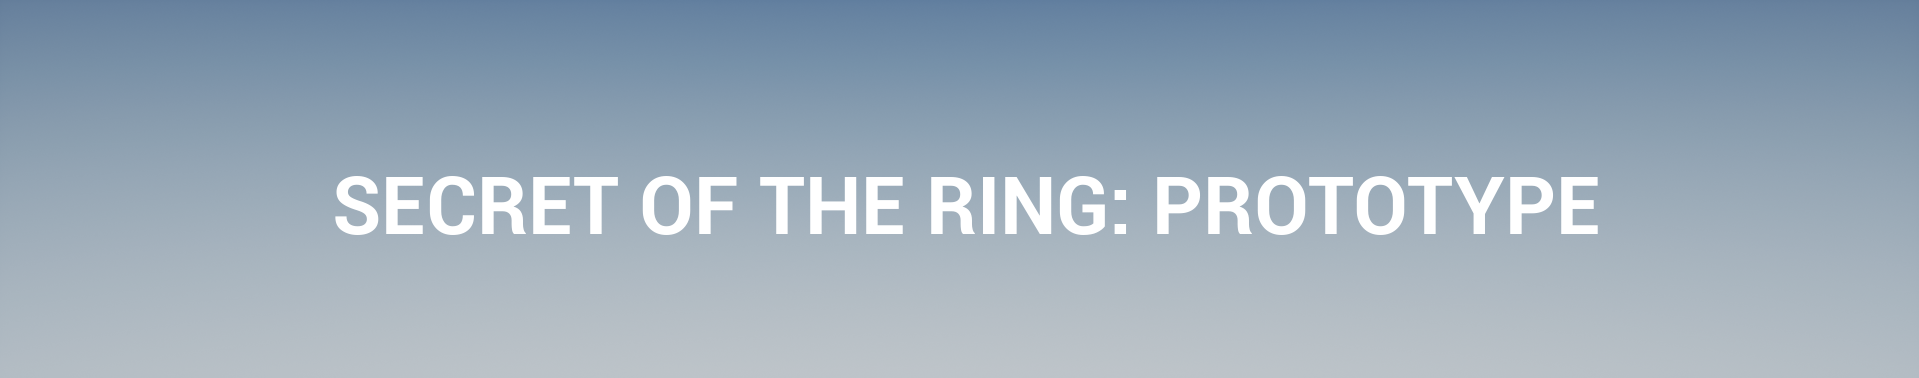 Secret of the Ring: prototype